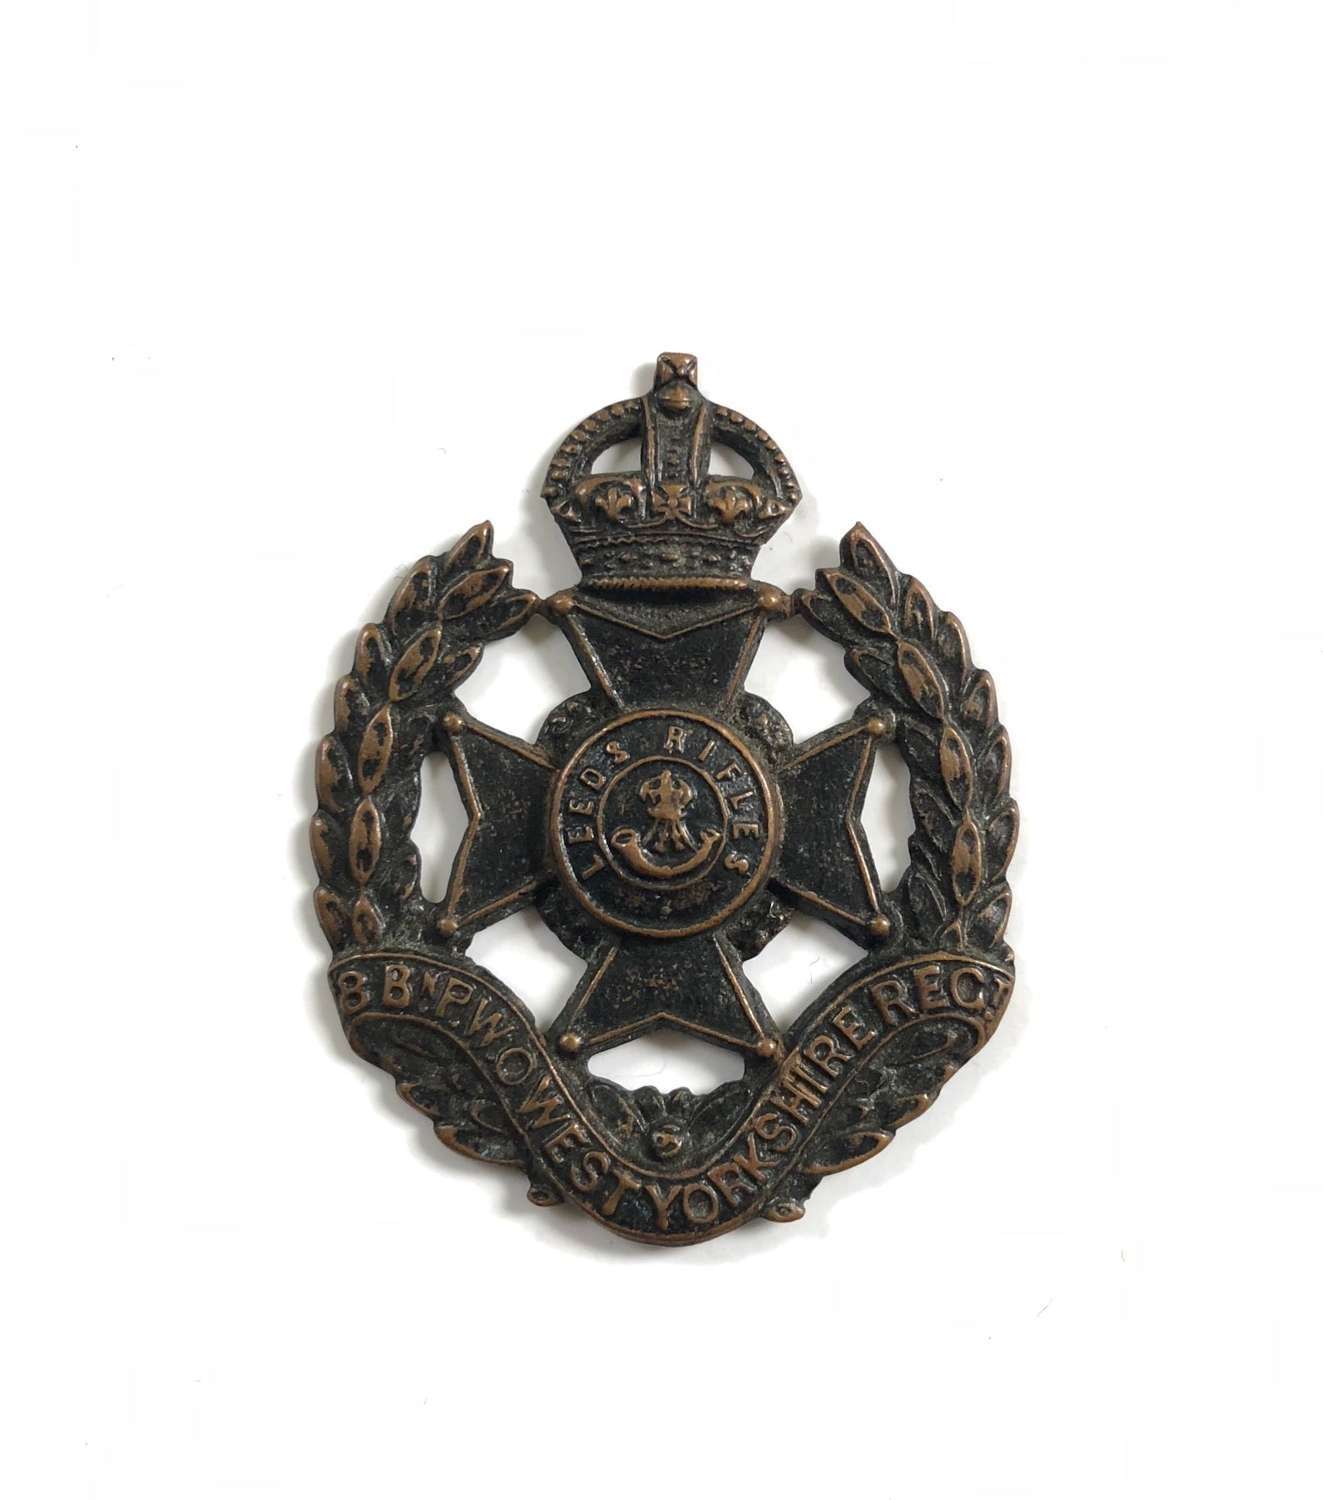 8th Bn (Leeds Rifles) West Yorkshire Regiment OR’s Cap Badge.